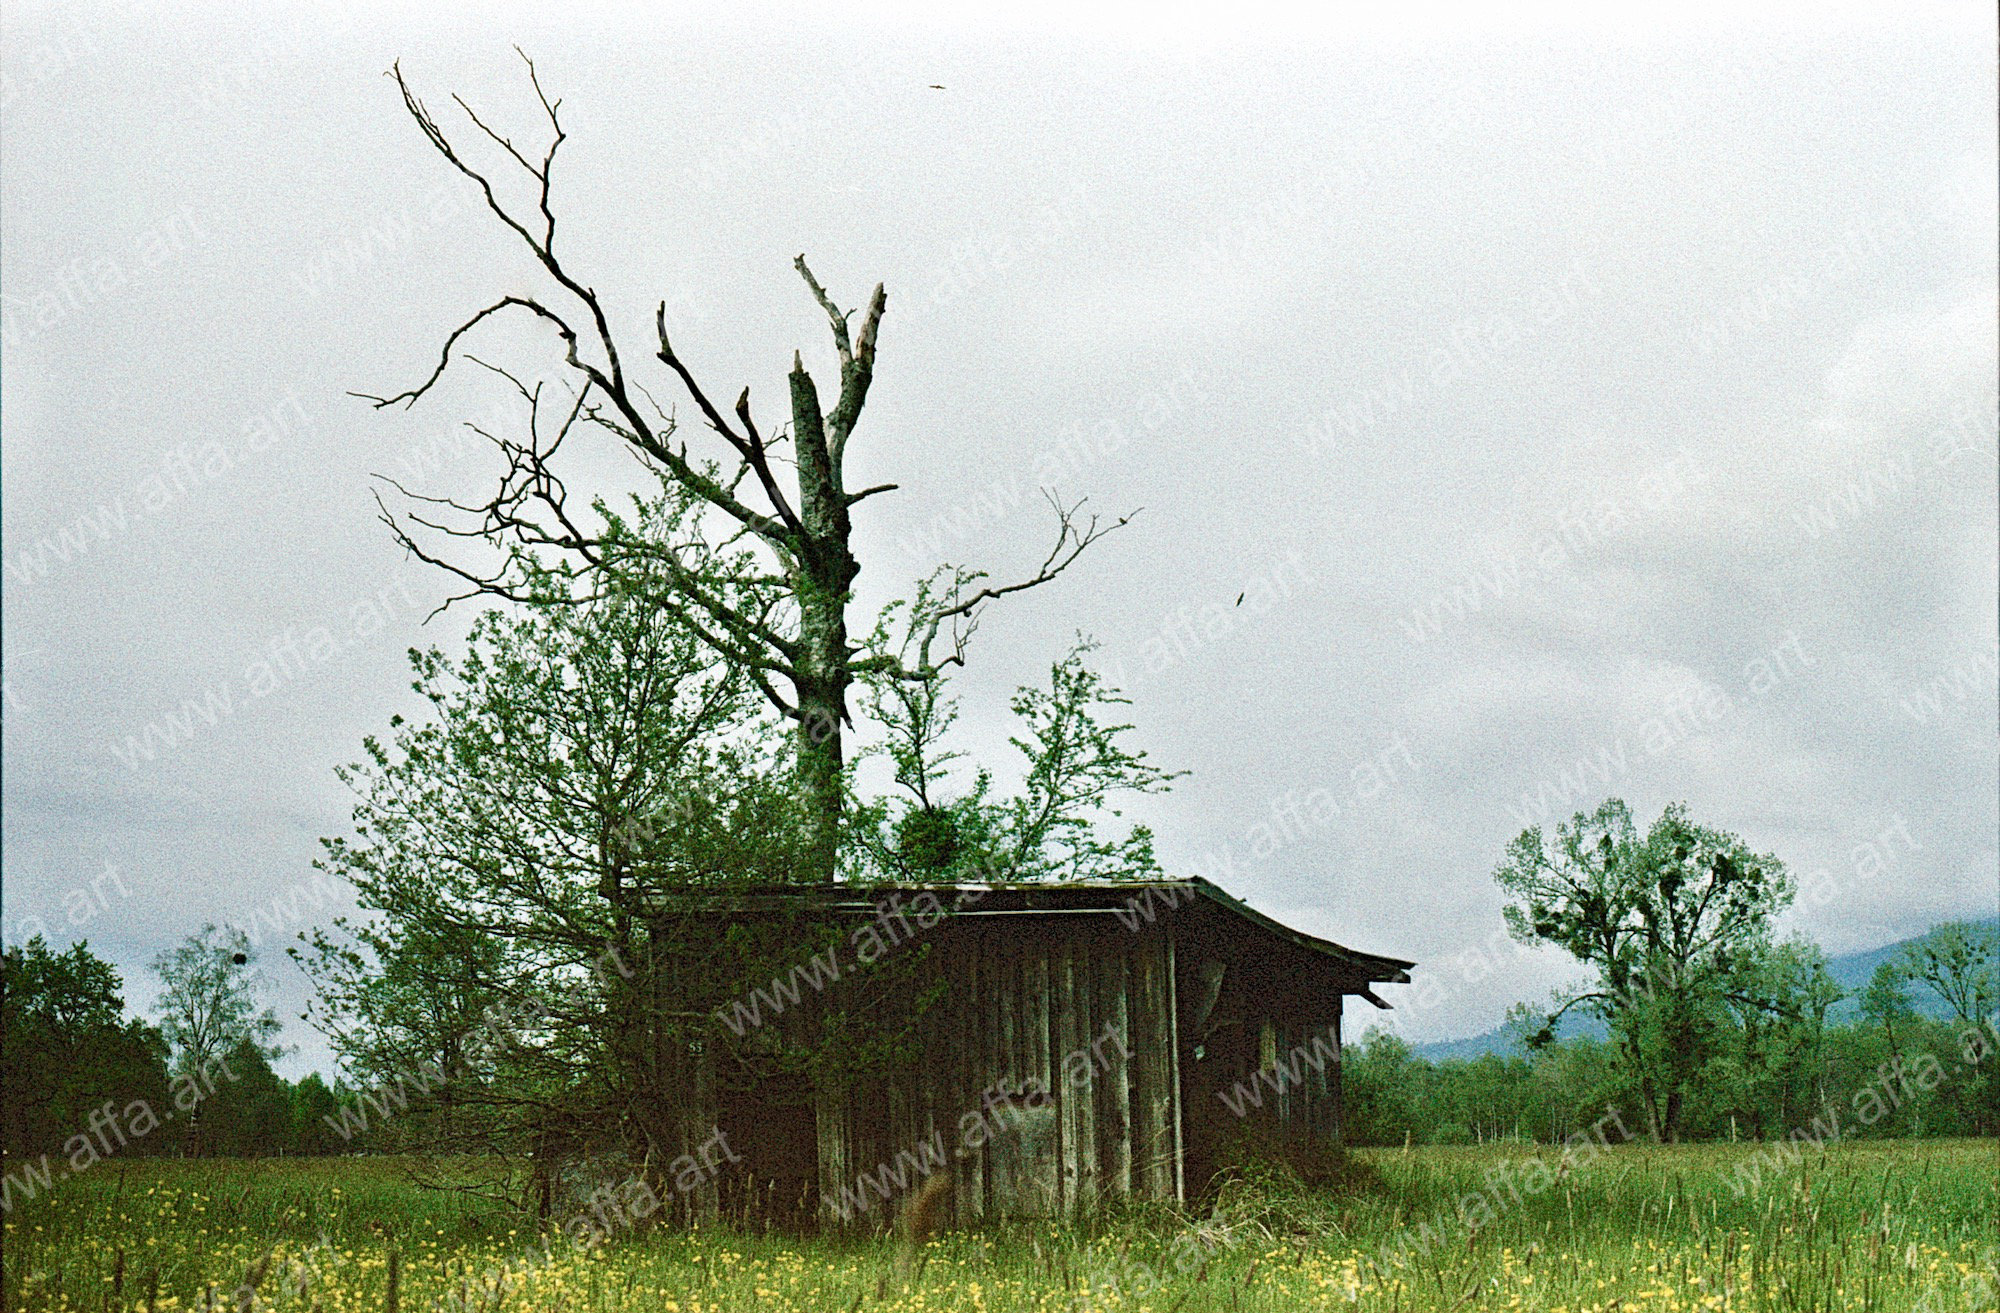 The Forgotten Hut